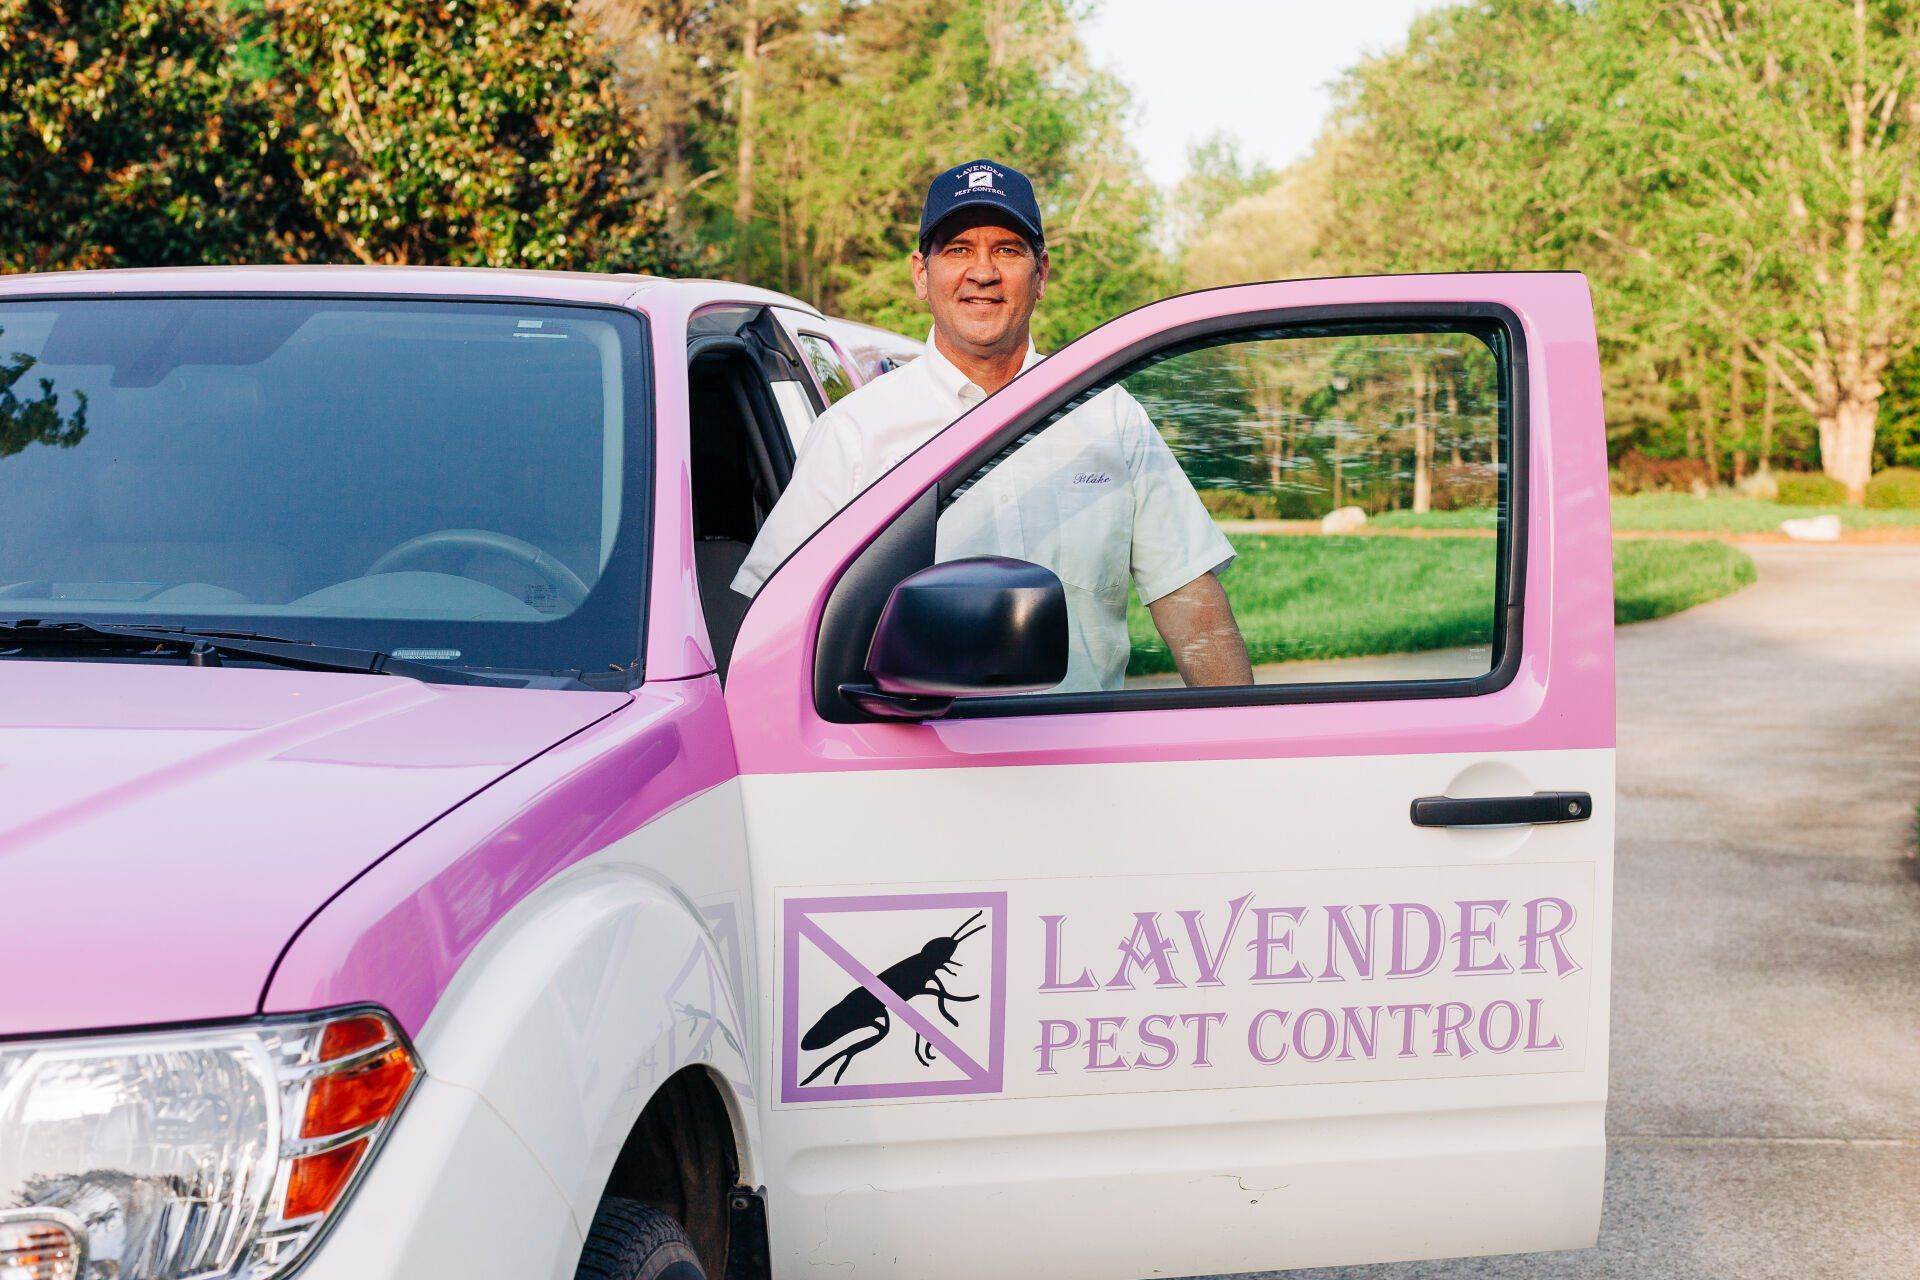 Lavender Pest Control's Blake Lavender